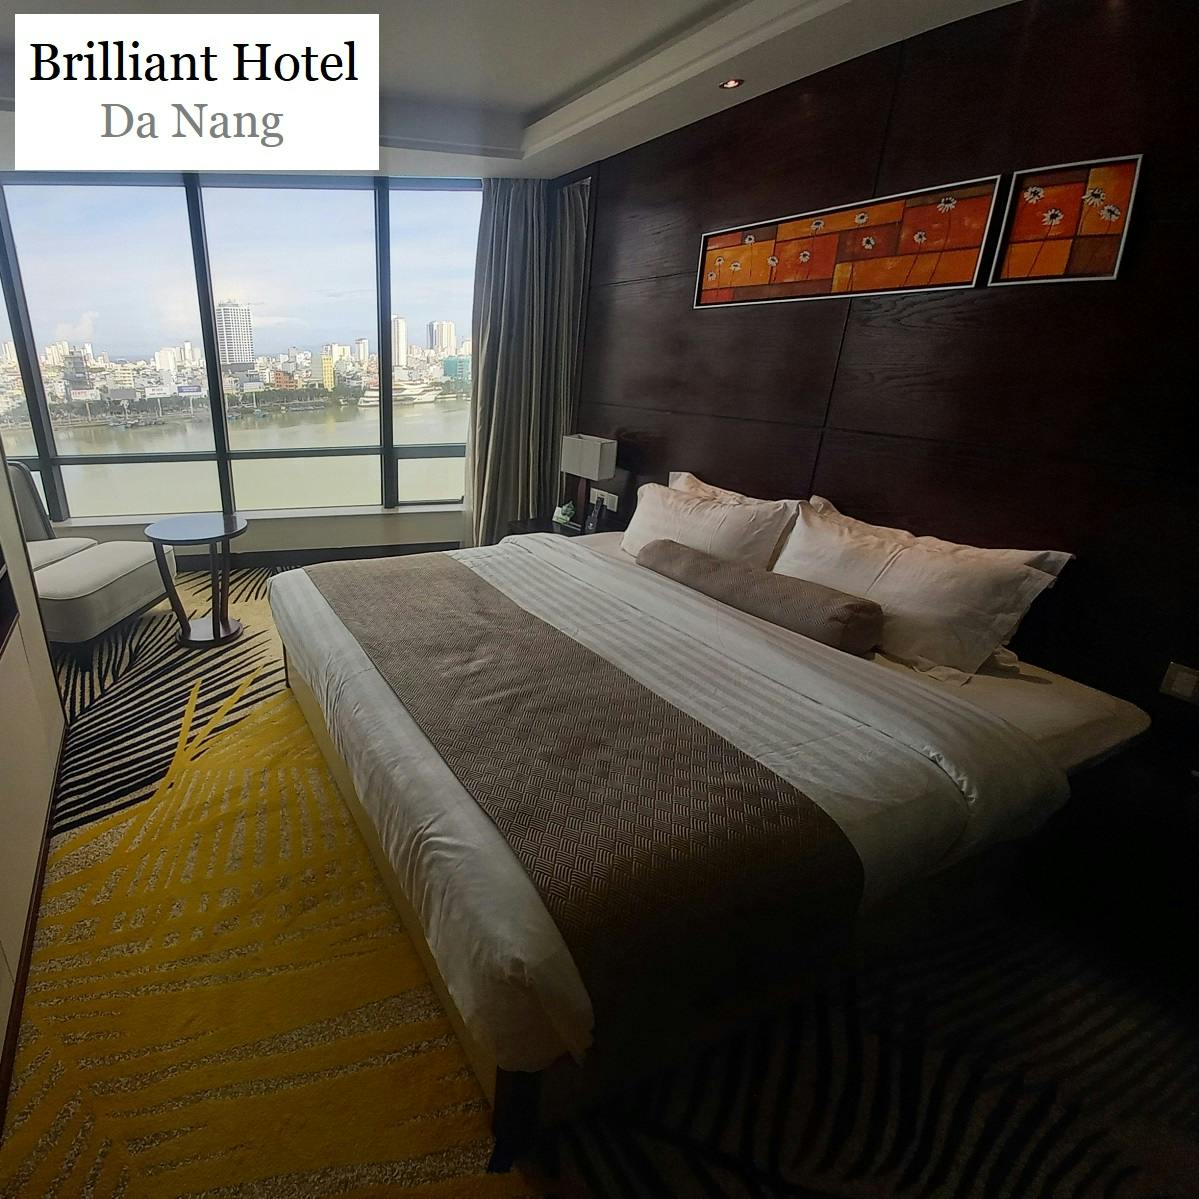 Brilliant Hotel, Da Nang, Vietnam, Independent Review